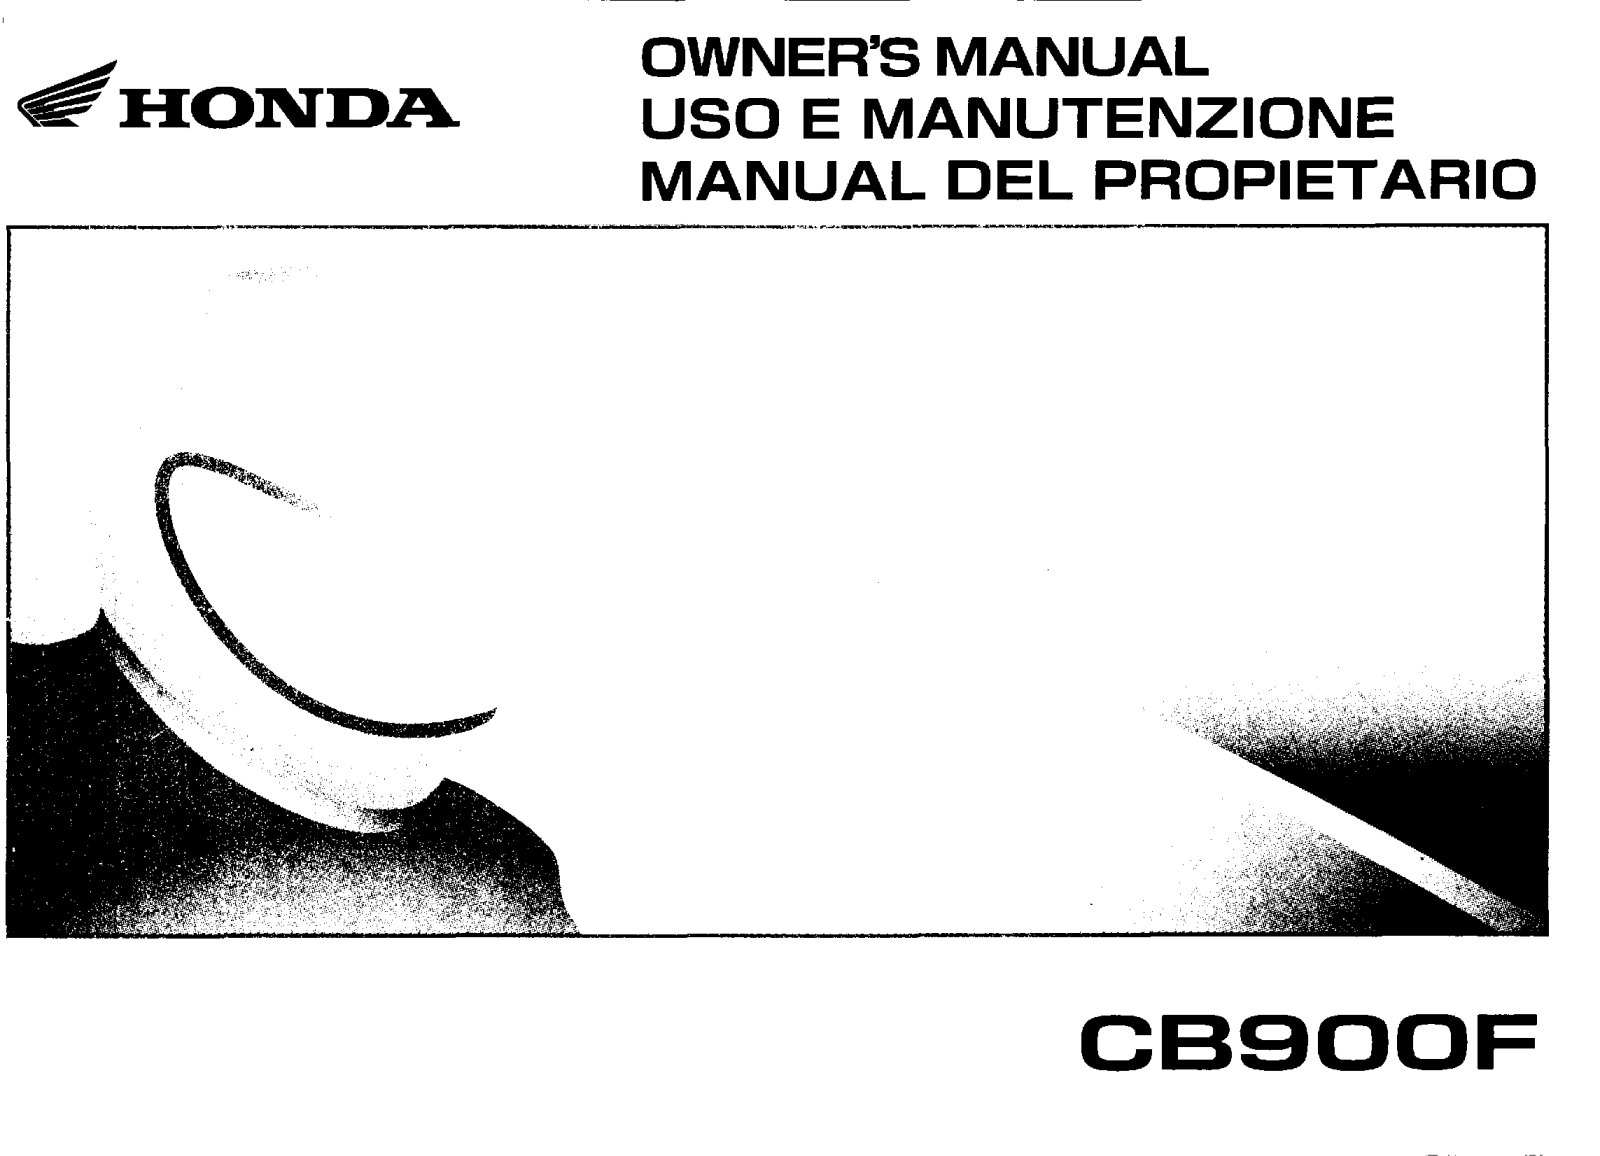 Honda CB900F 2006 Owner's Manual